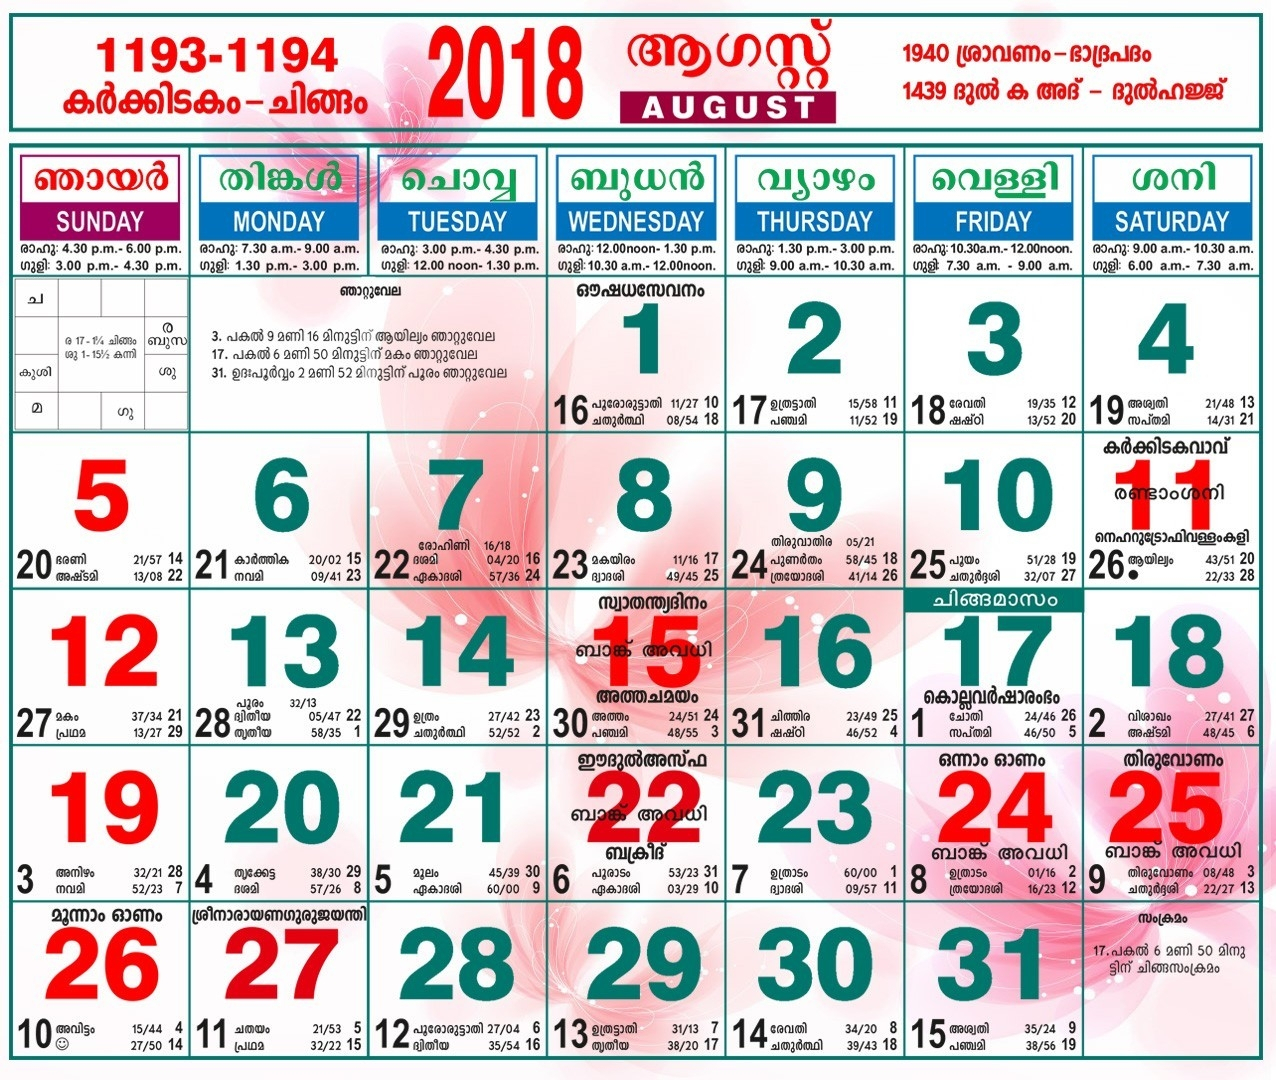 Calendar 2001 Malayalam August Image | Example Calendar regarding Malayalam Calendar 2001